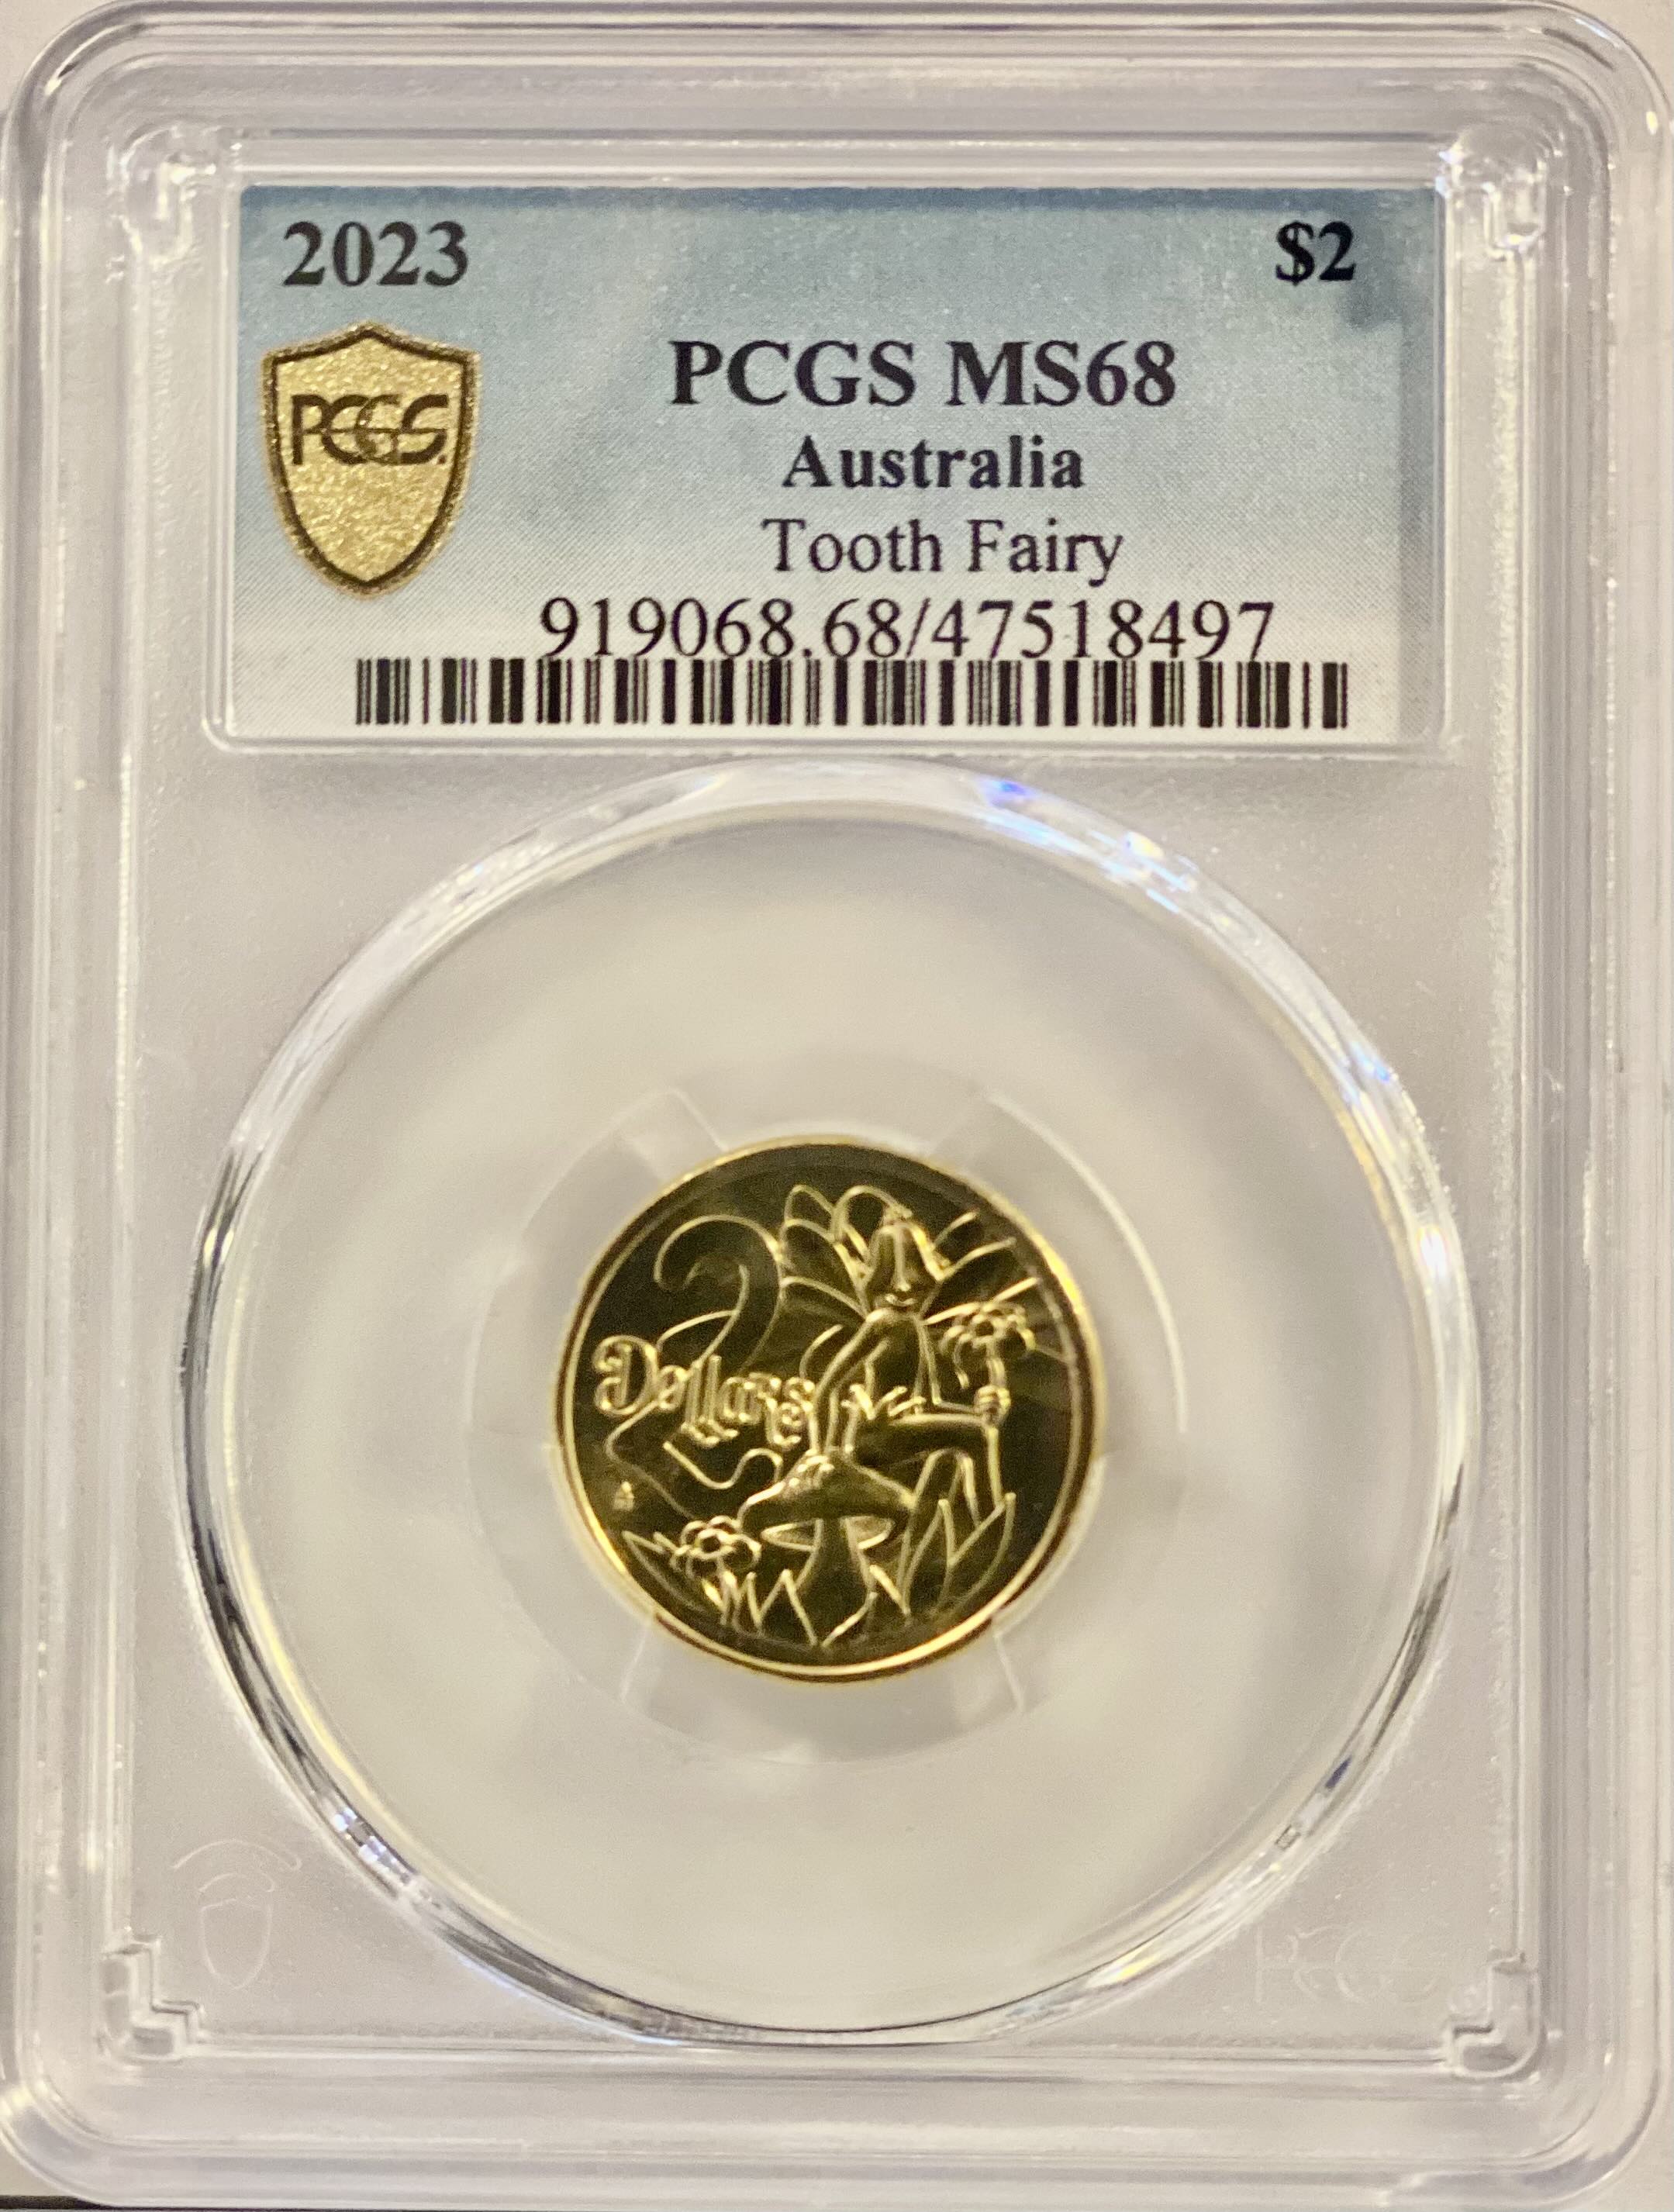 Royal Australian Mint 2023 $2 Tooth Fairy PCGS MS68